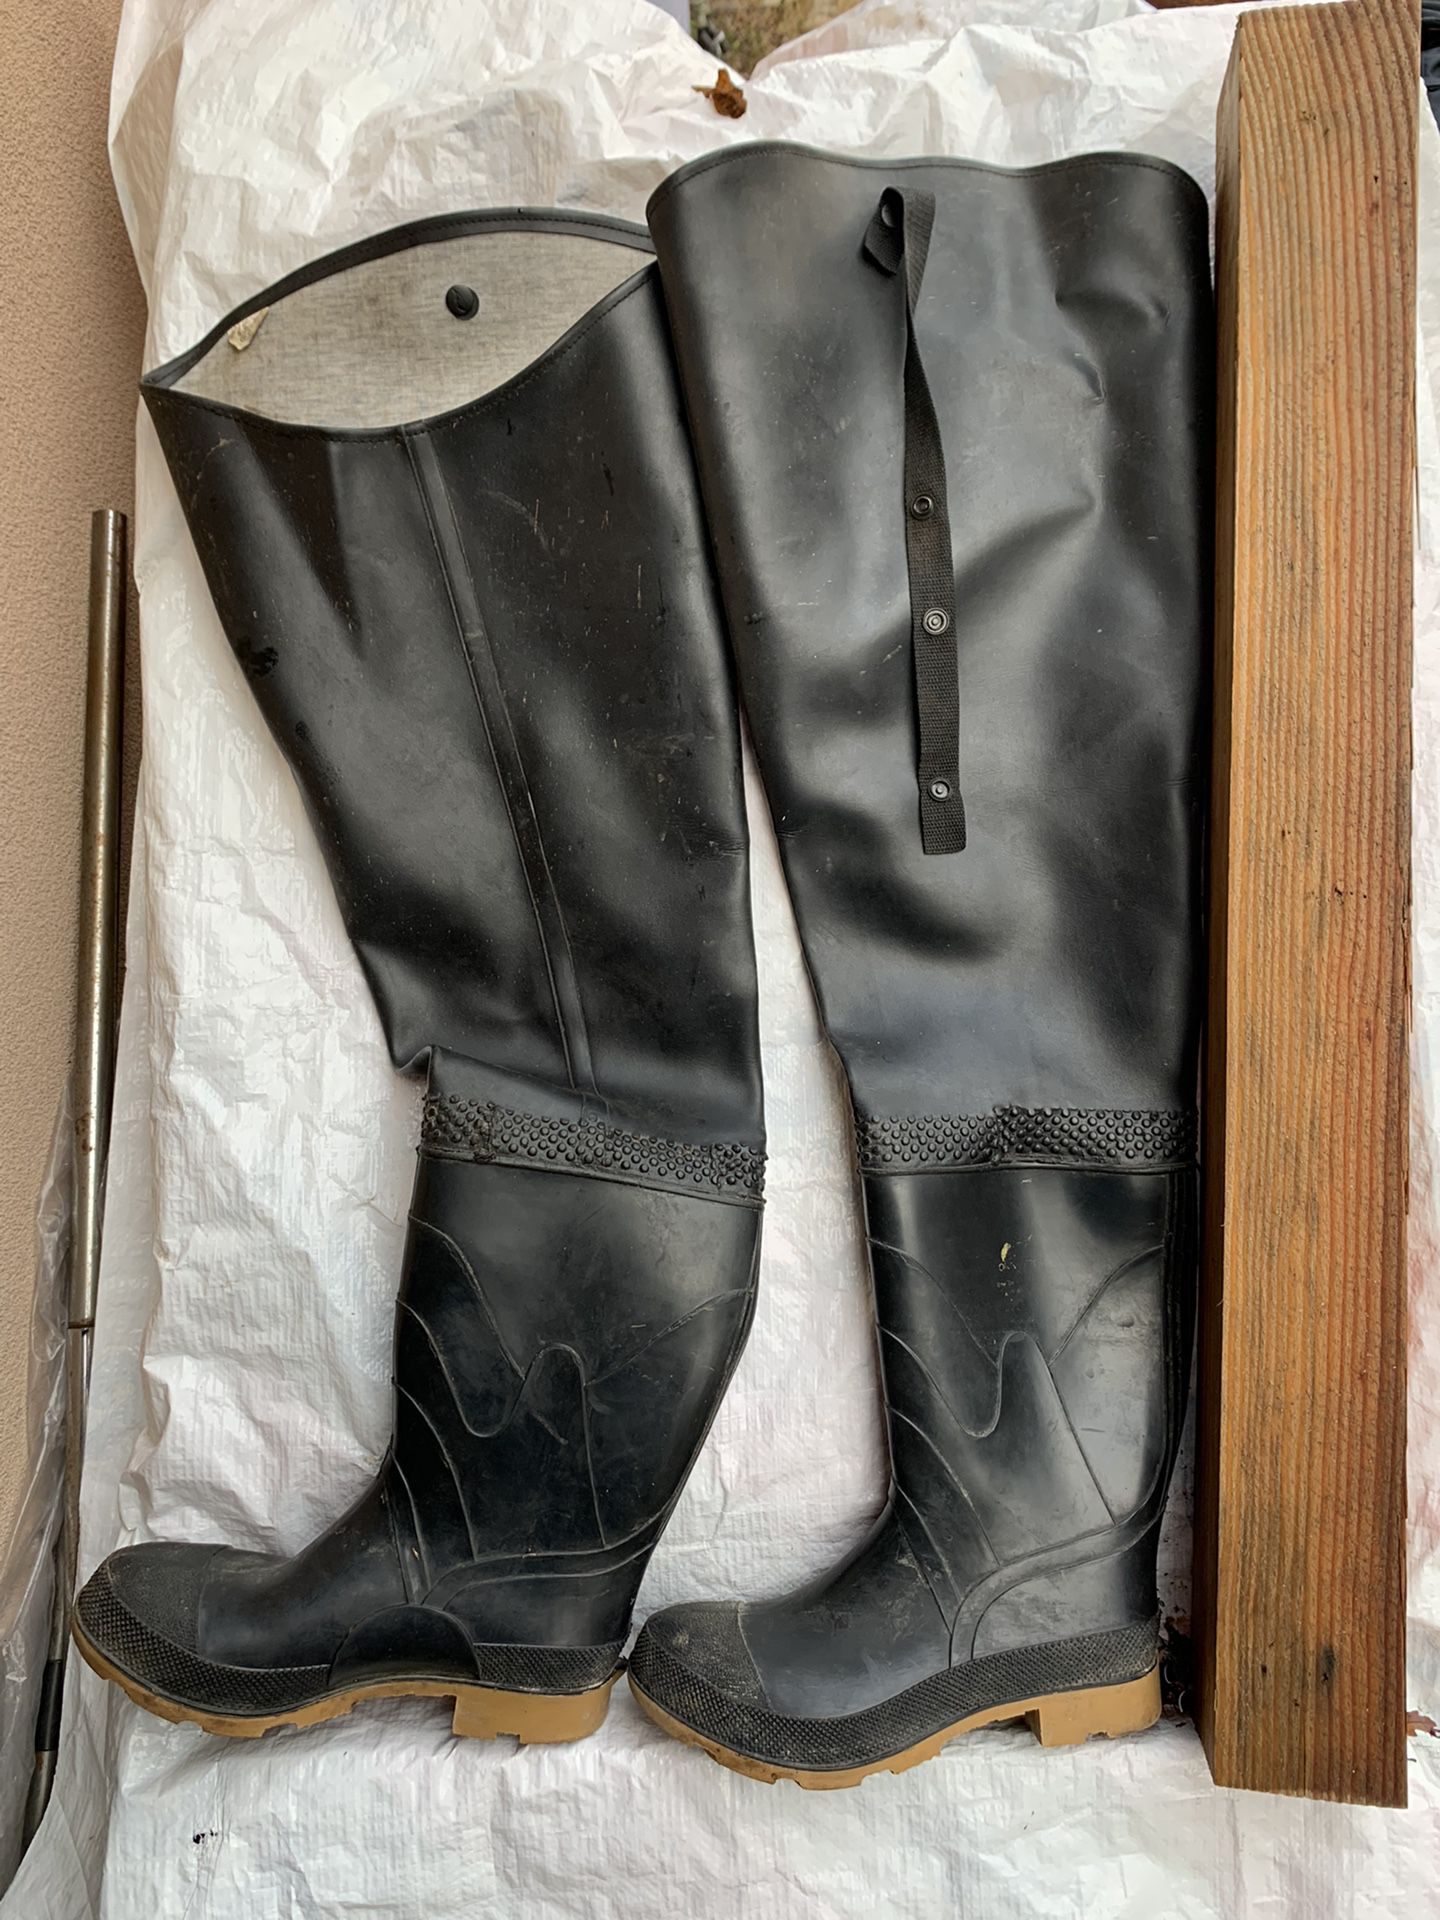 Bewonderenswaardig wasserette interieur Men's rubber boots over the knee boots. Size: 9. for Sale in Orangevale, CA  - OfferUp